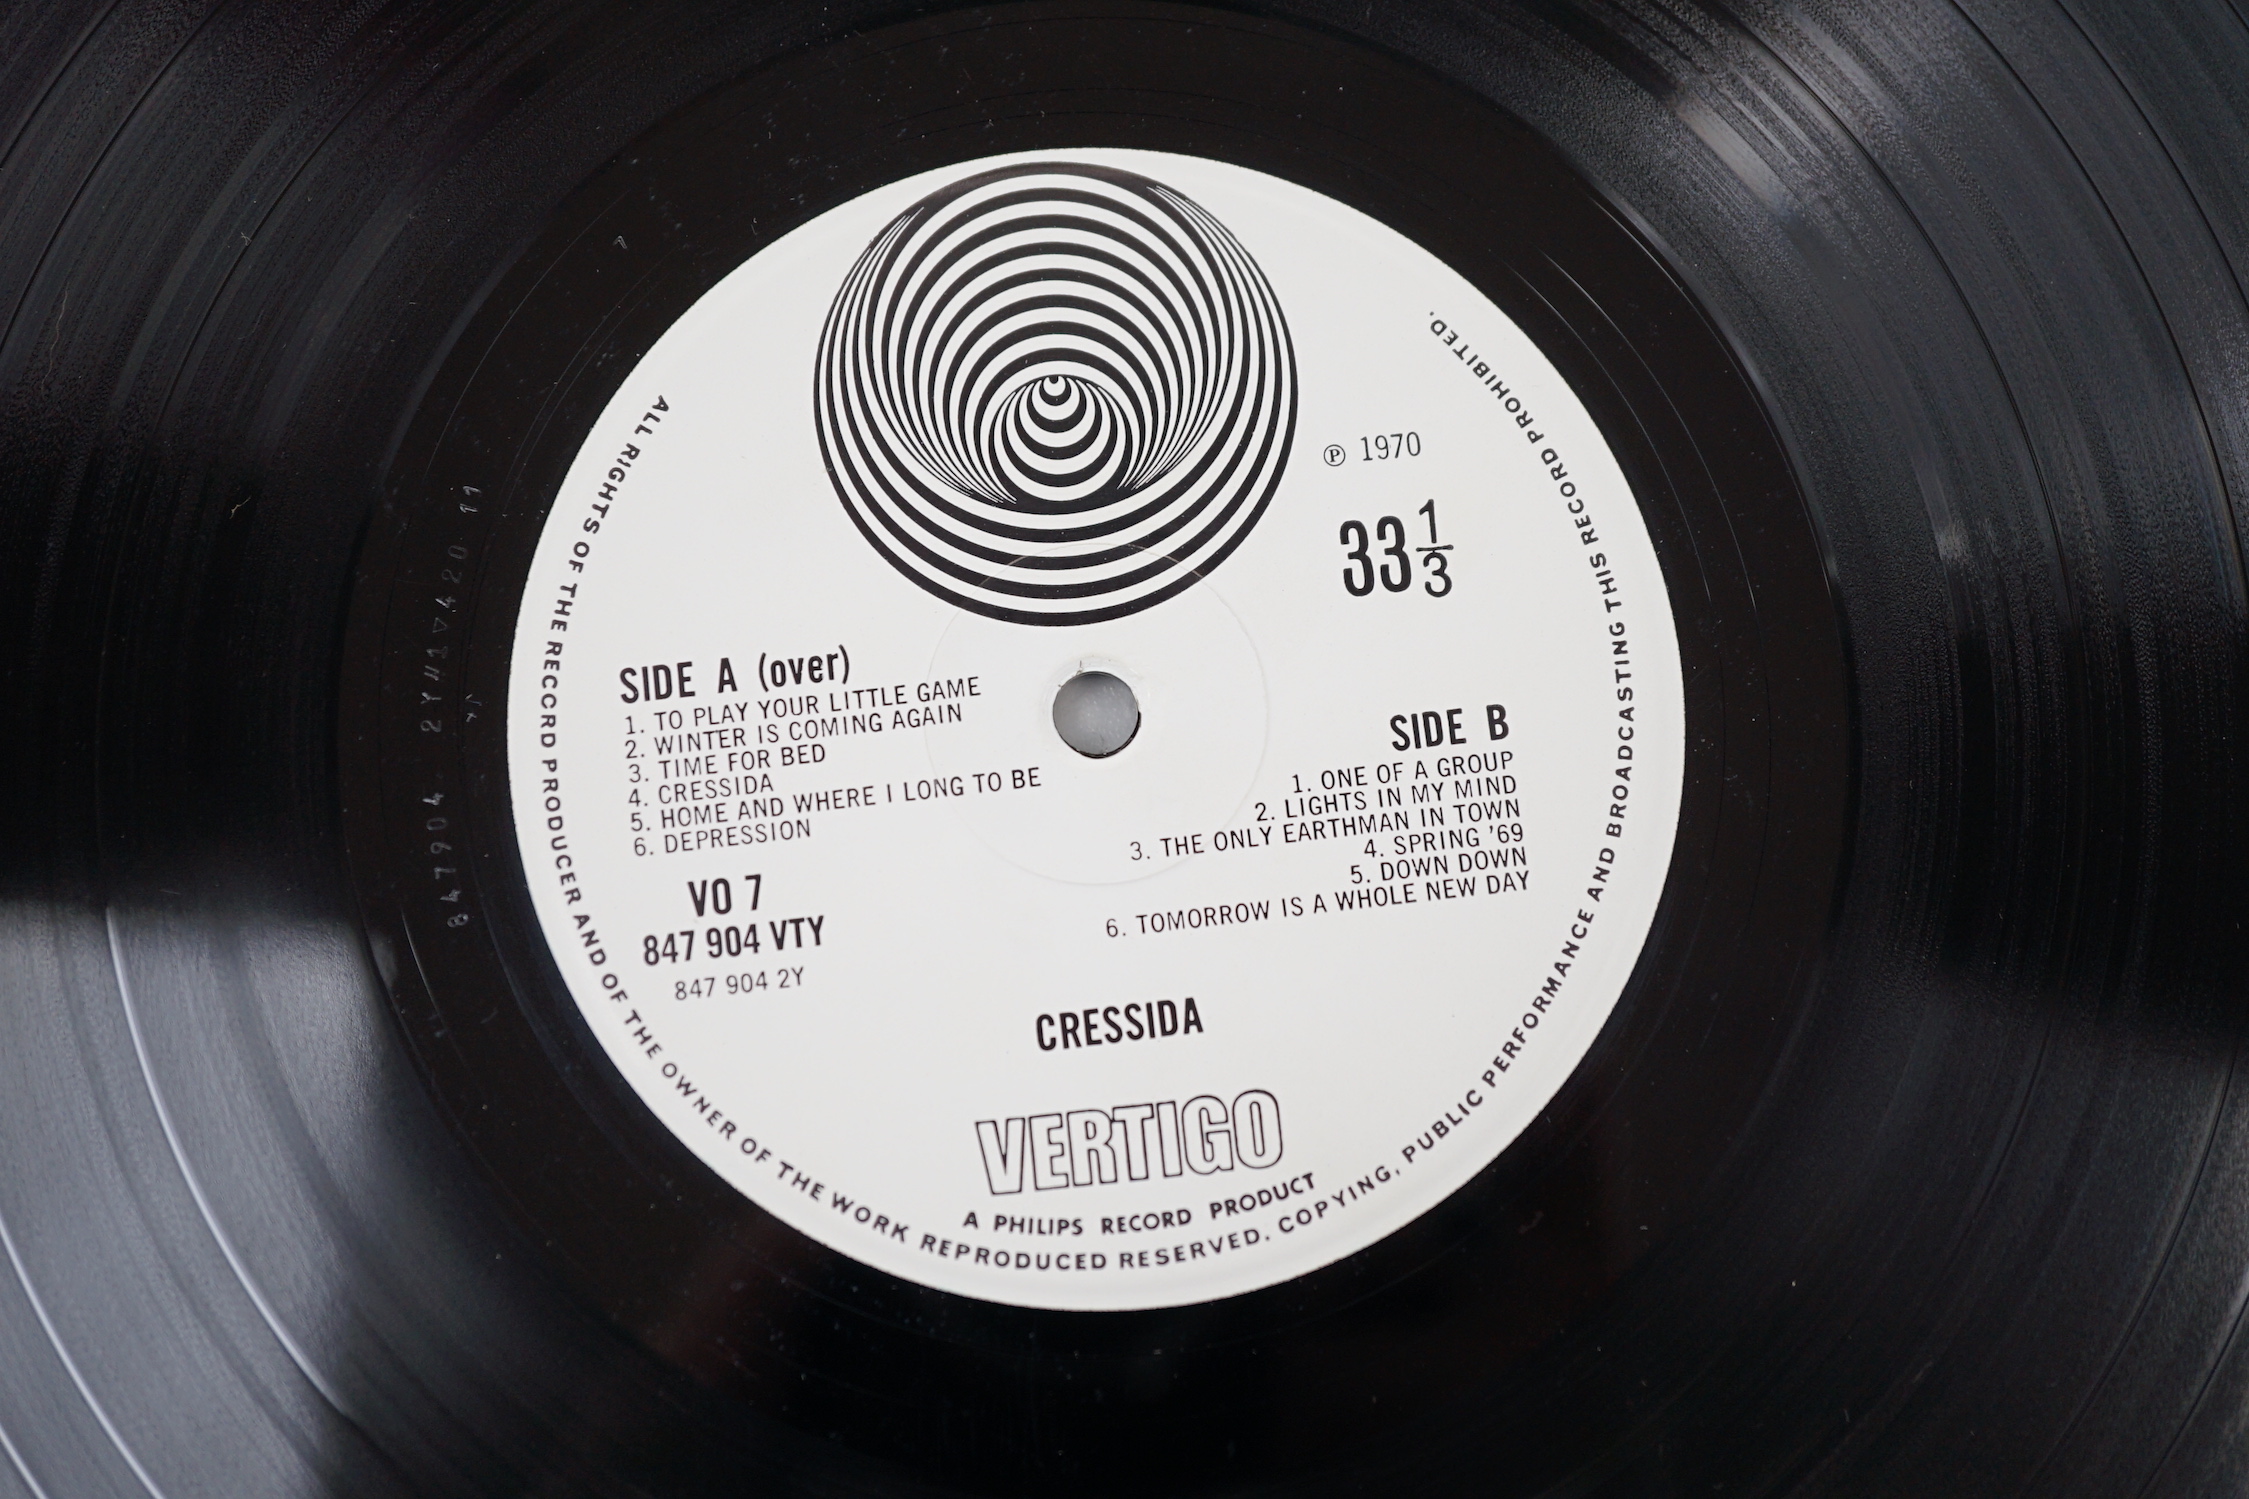 Cressida LP record album, Cressida, on Vertigo large swirl label, VO 7, in gatefold sleeve with - Image 2 of 3